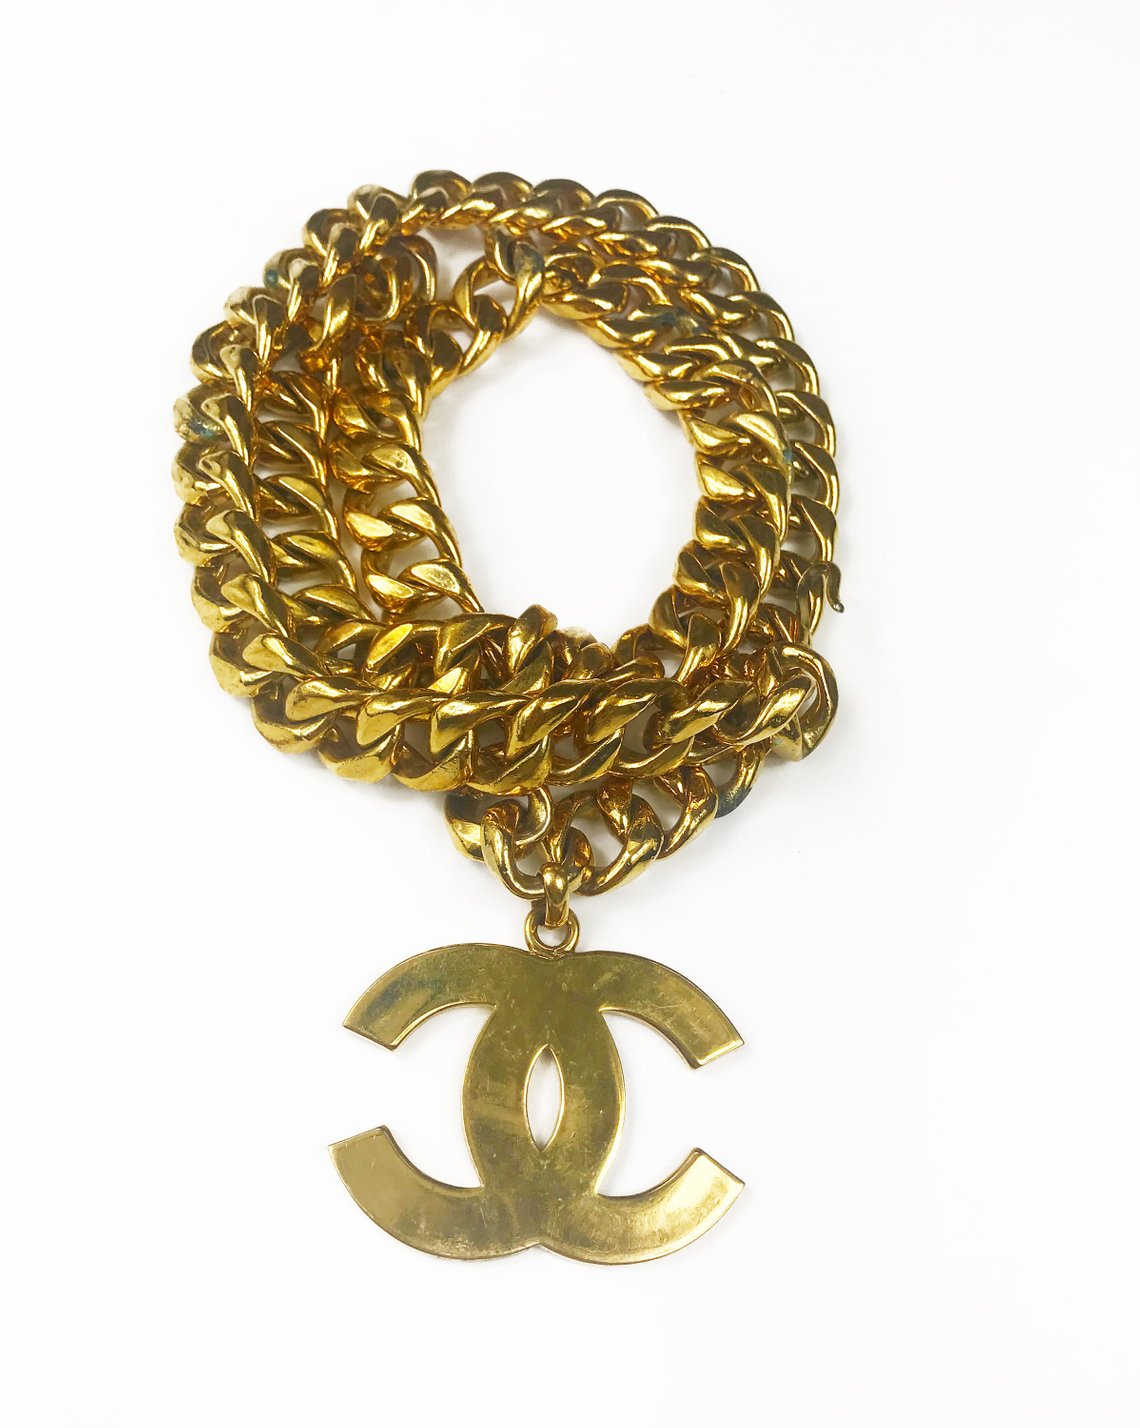 Chanel Necklaces - Channel Design - Brand Designs